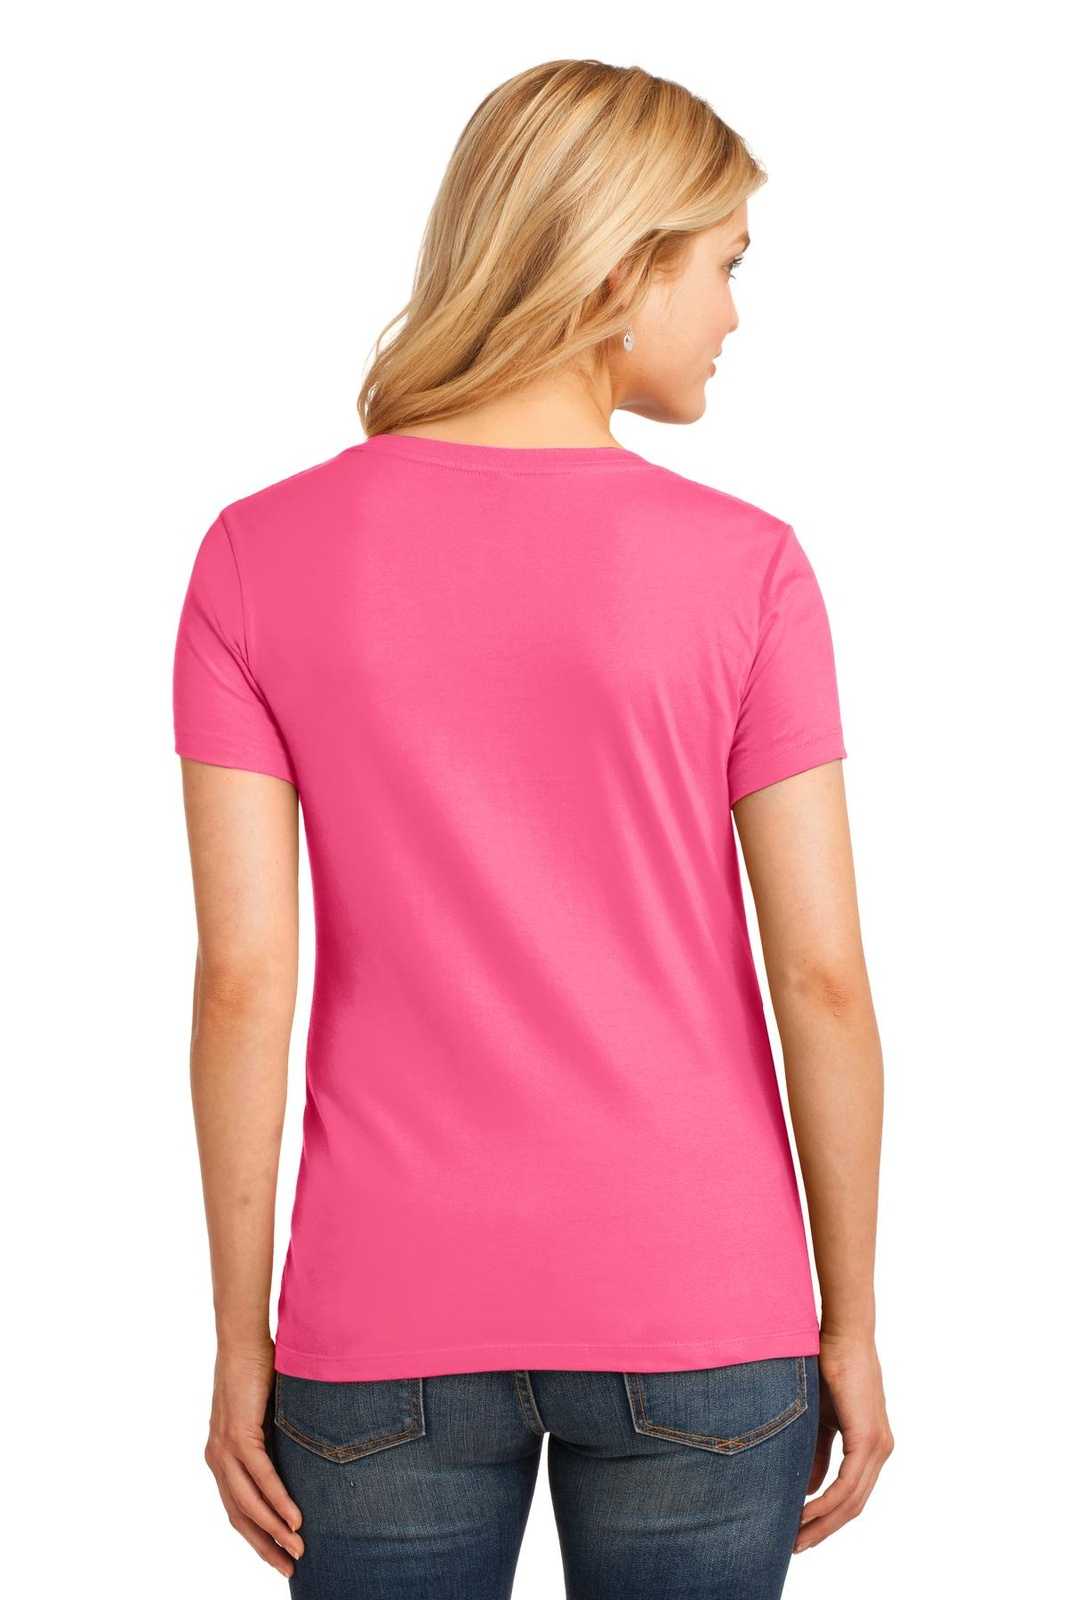 Port & Company LPC54V Ladies Core Cotton V-Neck Tee - Neon Pink - HIT a Double - 1